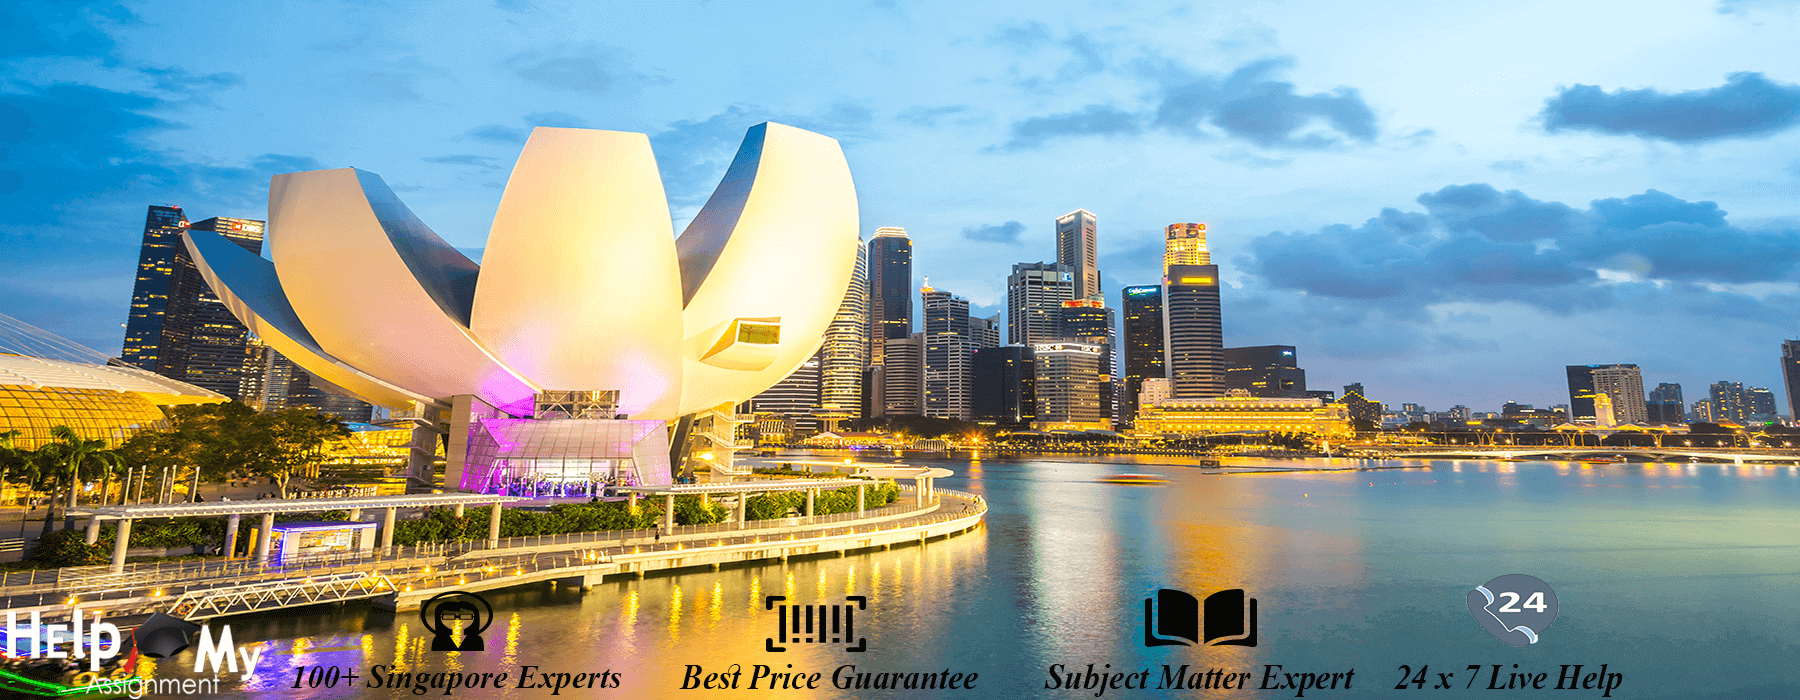 Assignment help singapore